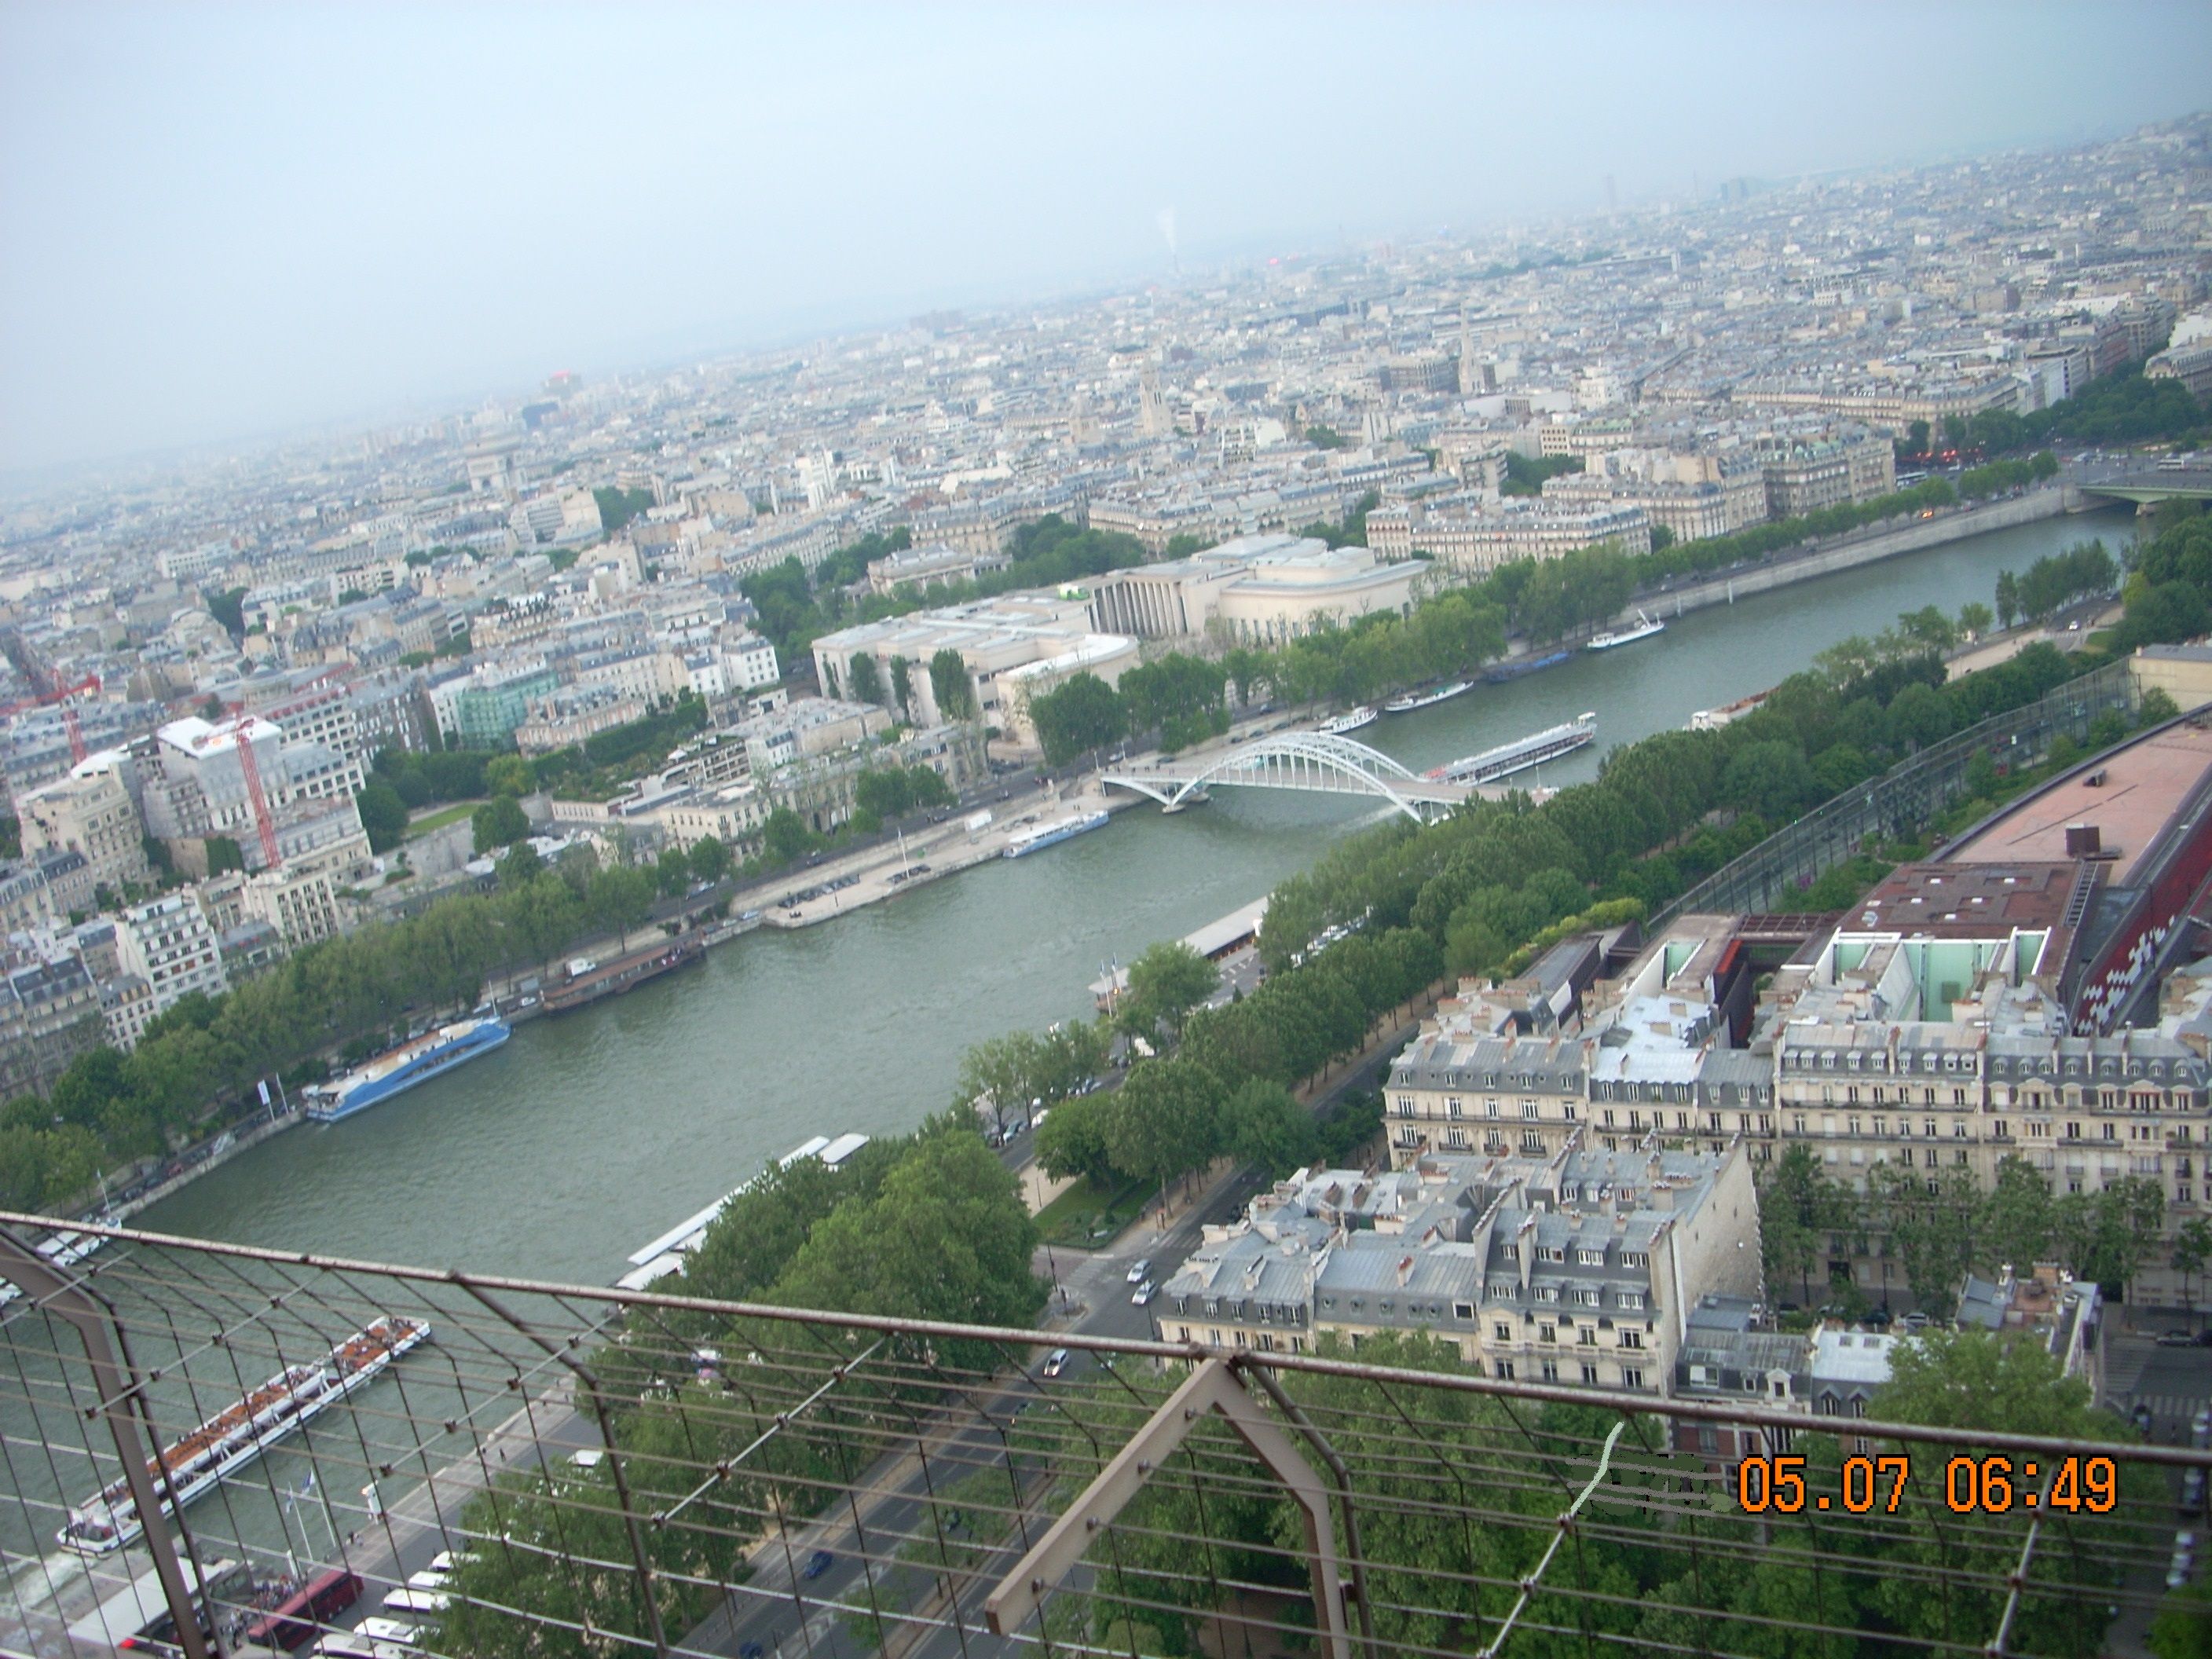 An overview of Paris from Eiffel Tower.
!JPG